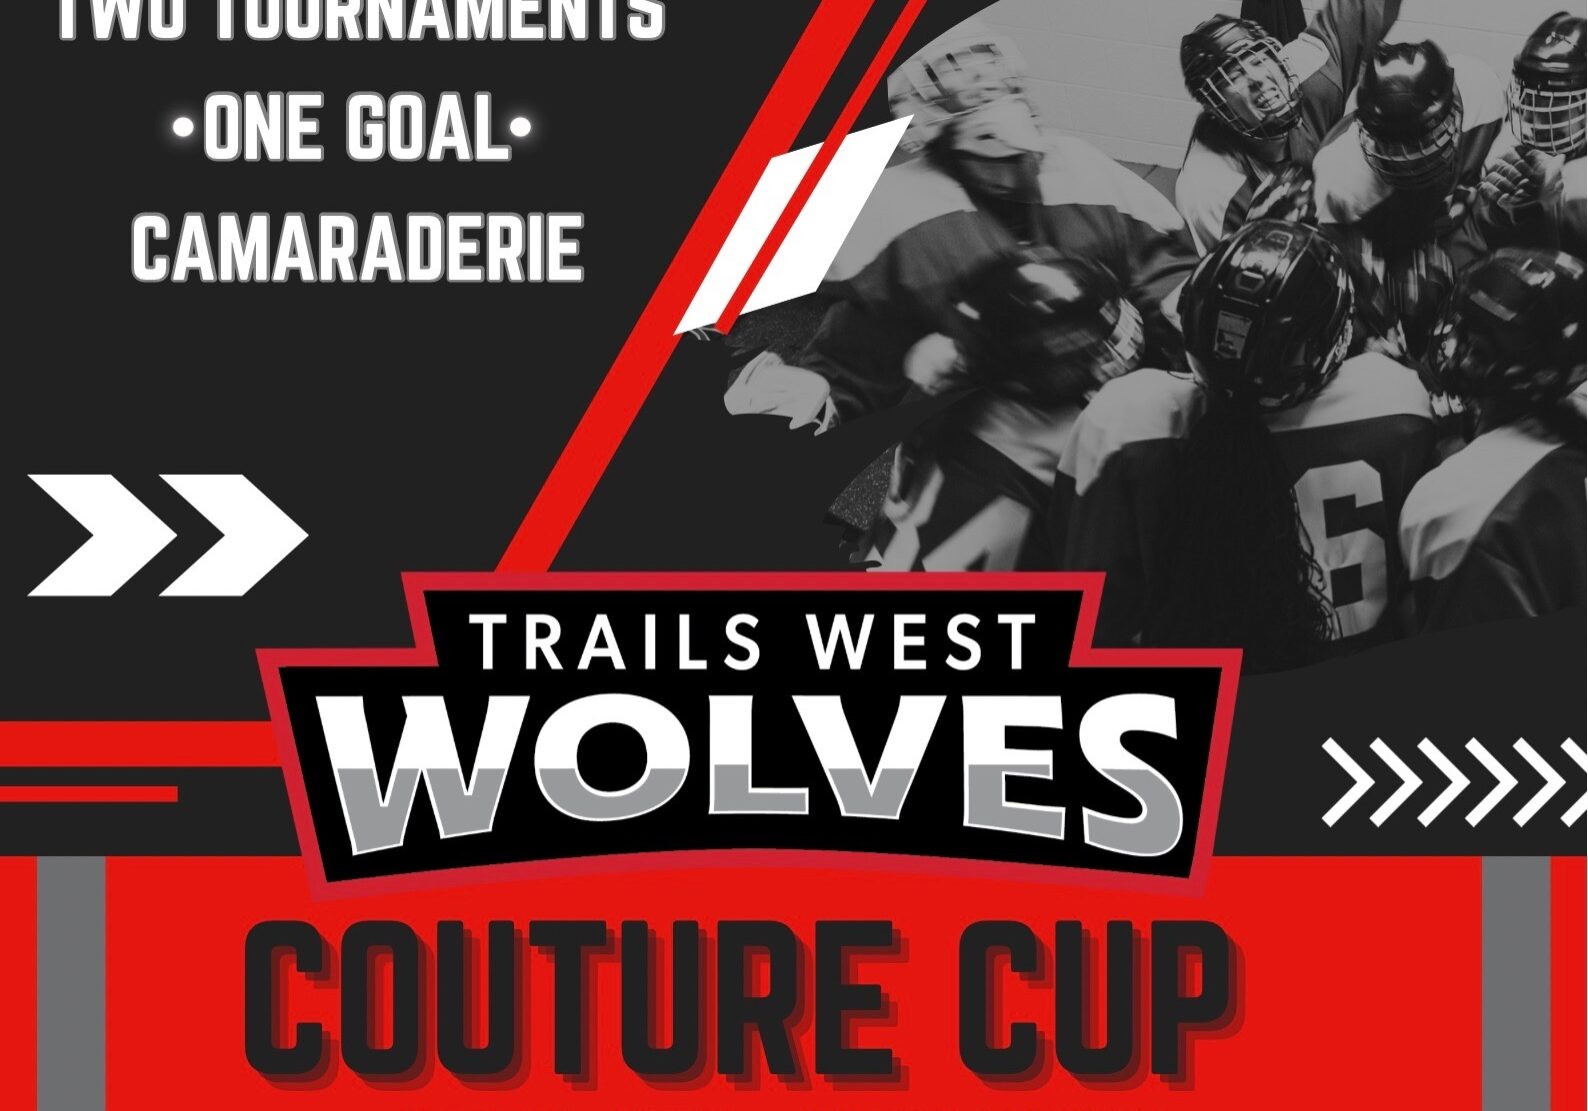 Website image - Courture Cup